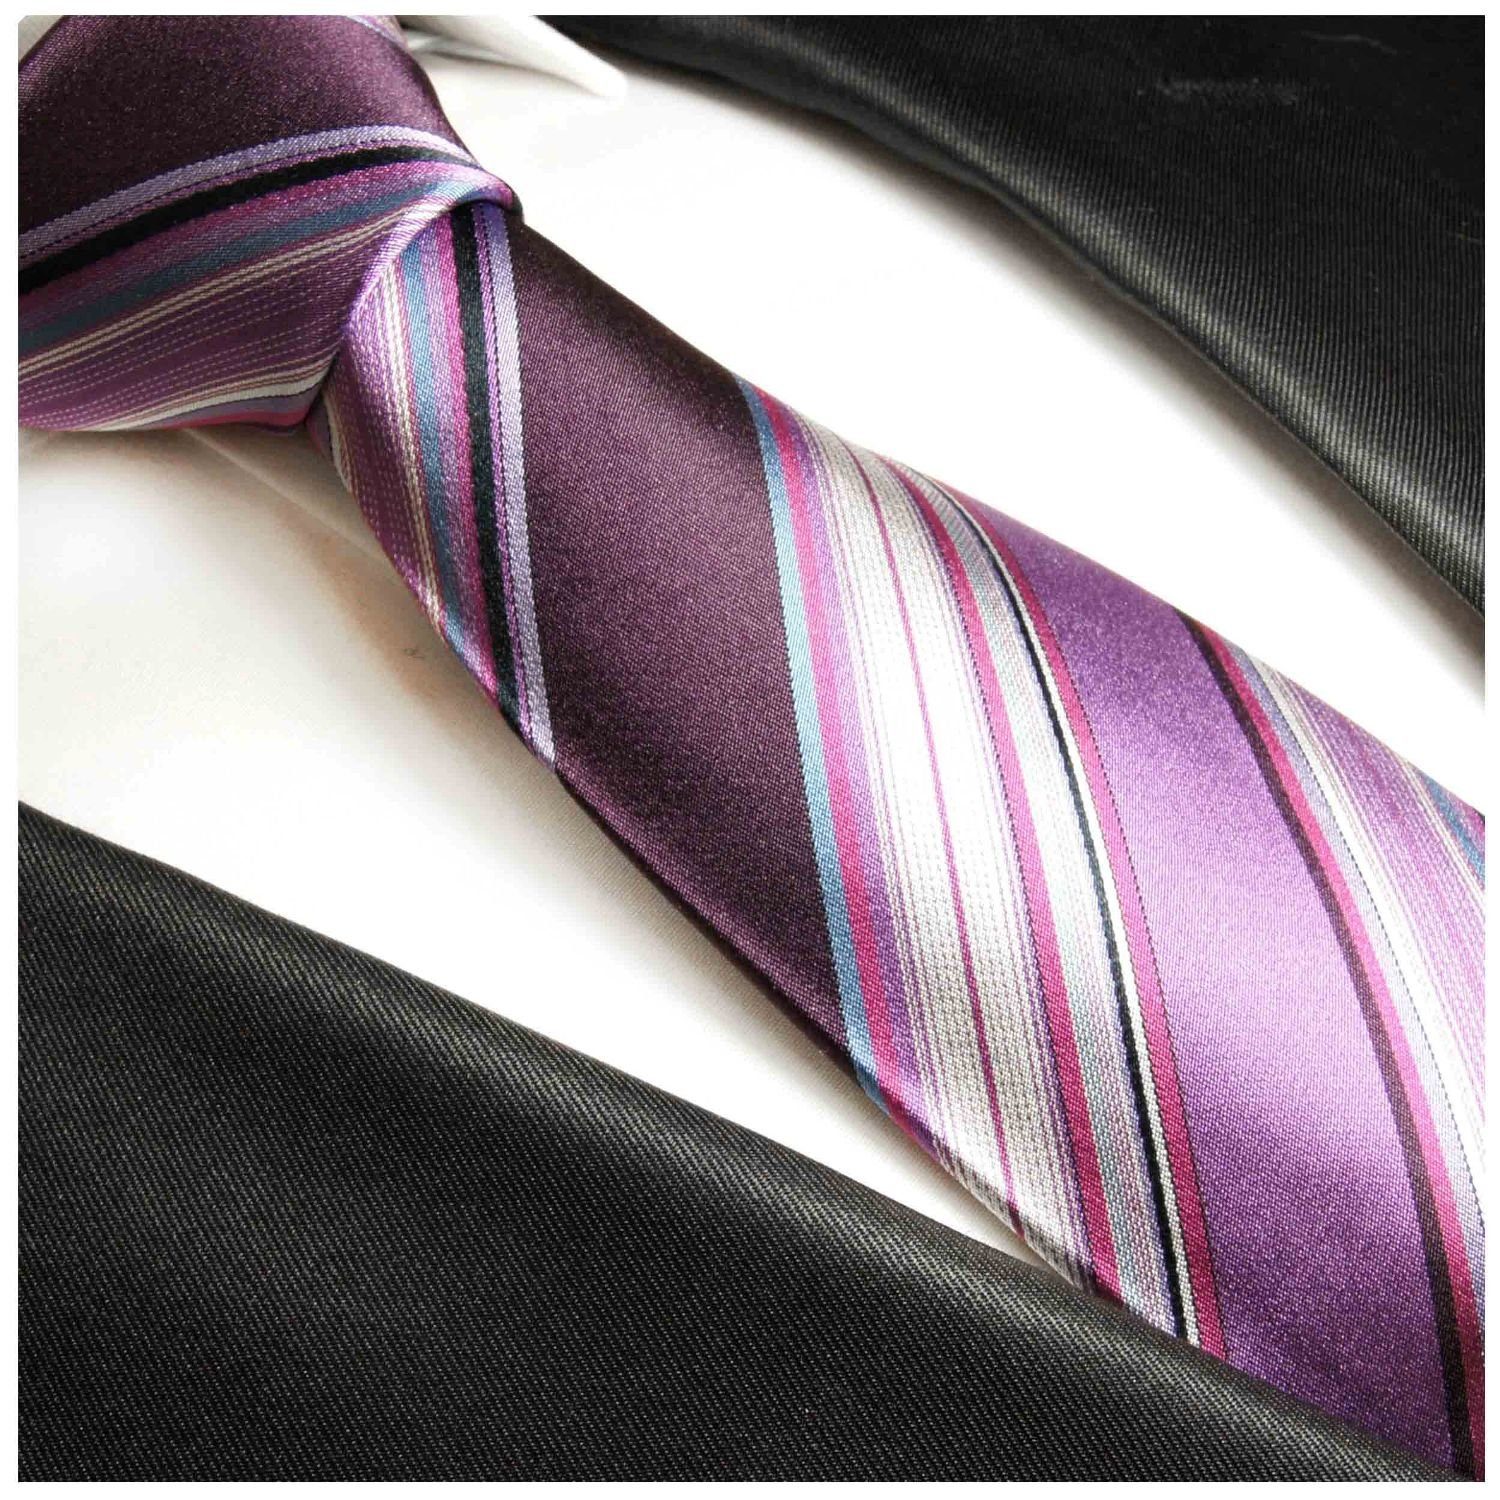 Schlips lila 251 modern Paul Schmal 100% Seide Seidenkrawatte Herren violett (6cm), Malone gestreift Krawatte Designer